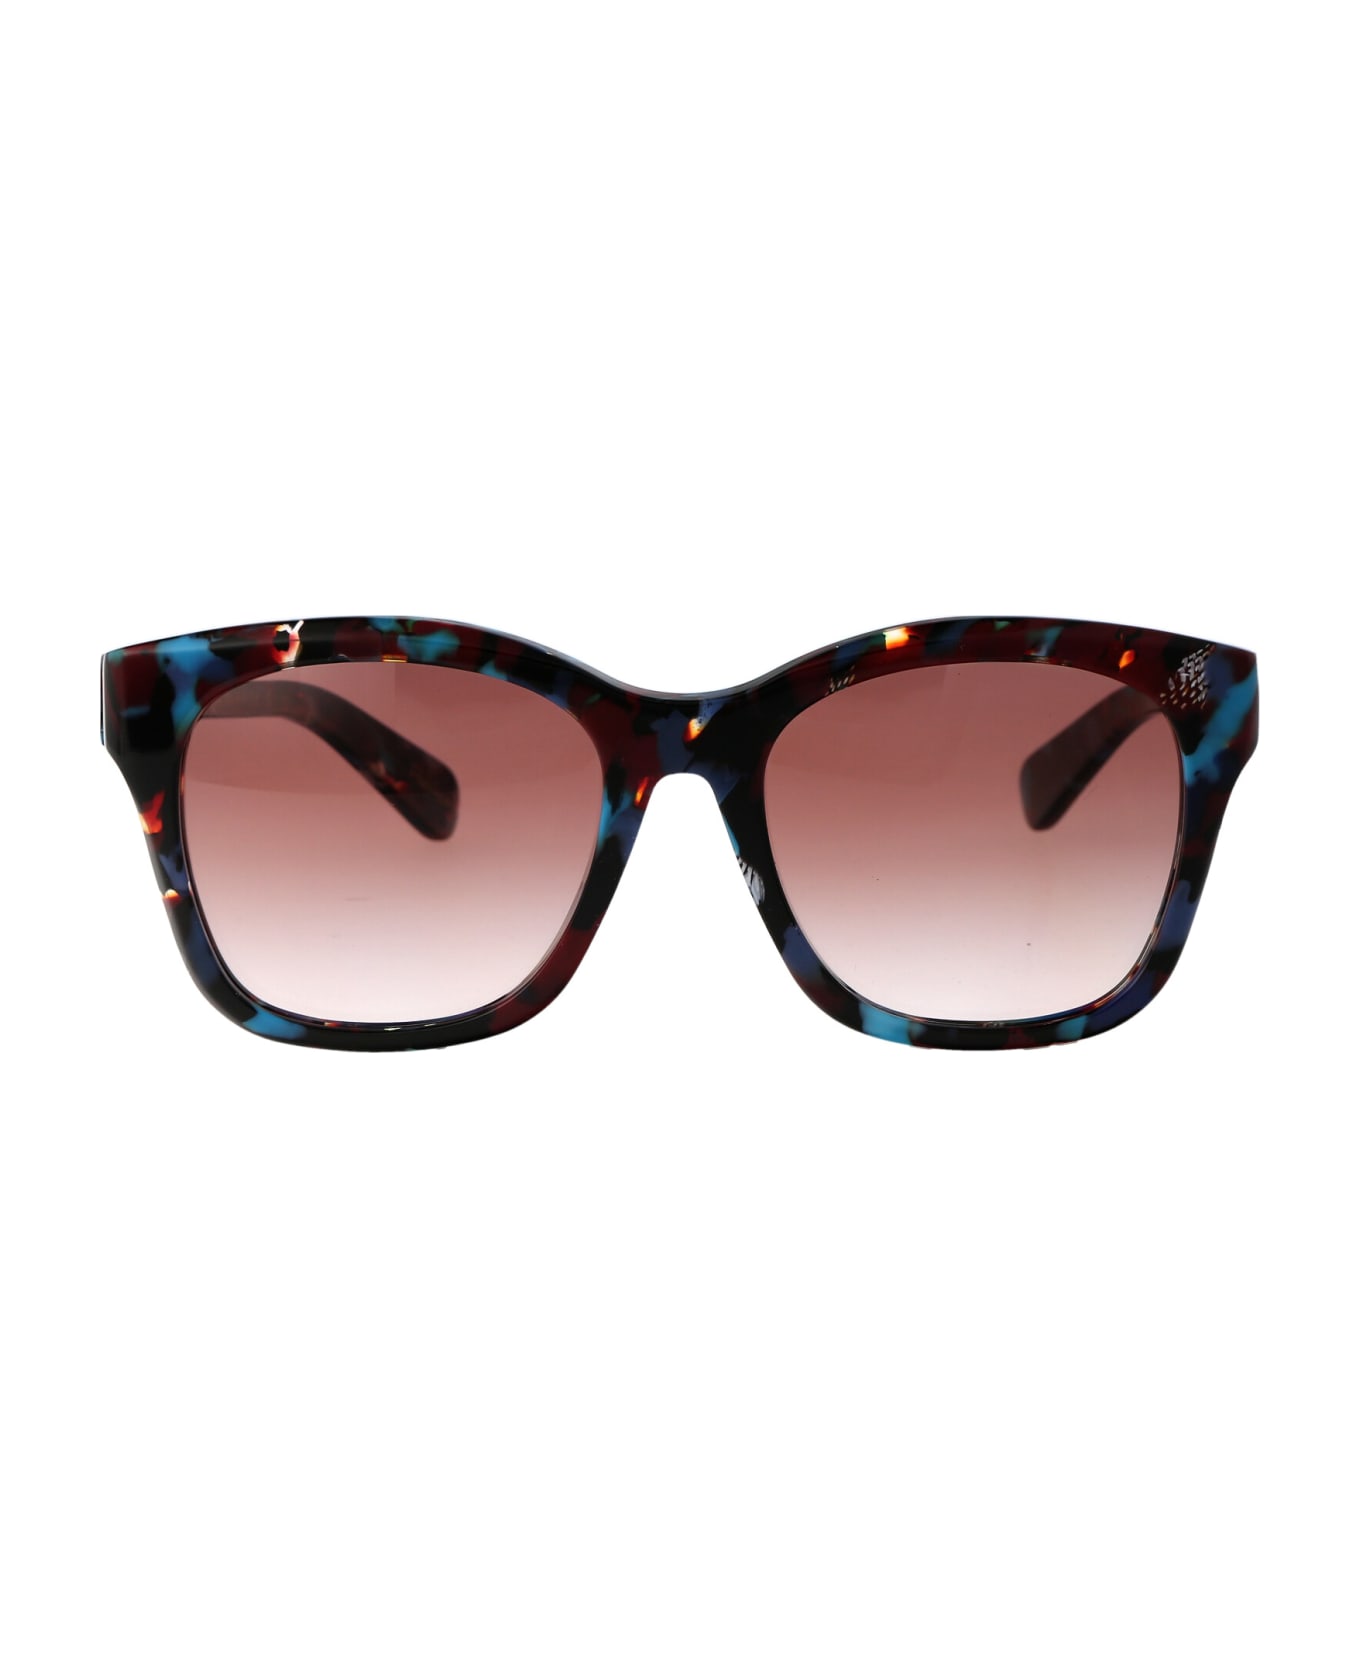 Chloé Eyewear Ch0194sk Sunglasses - 005 HAVANA HAVANA RED